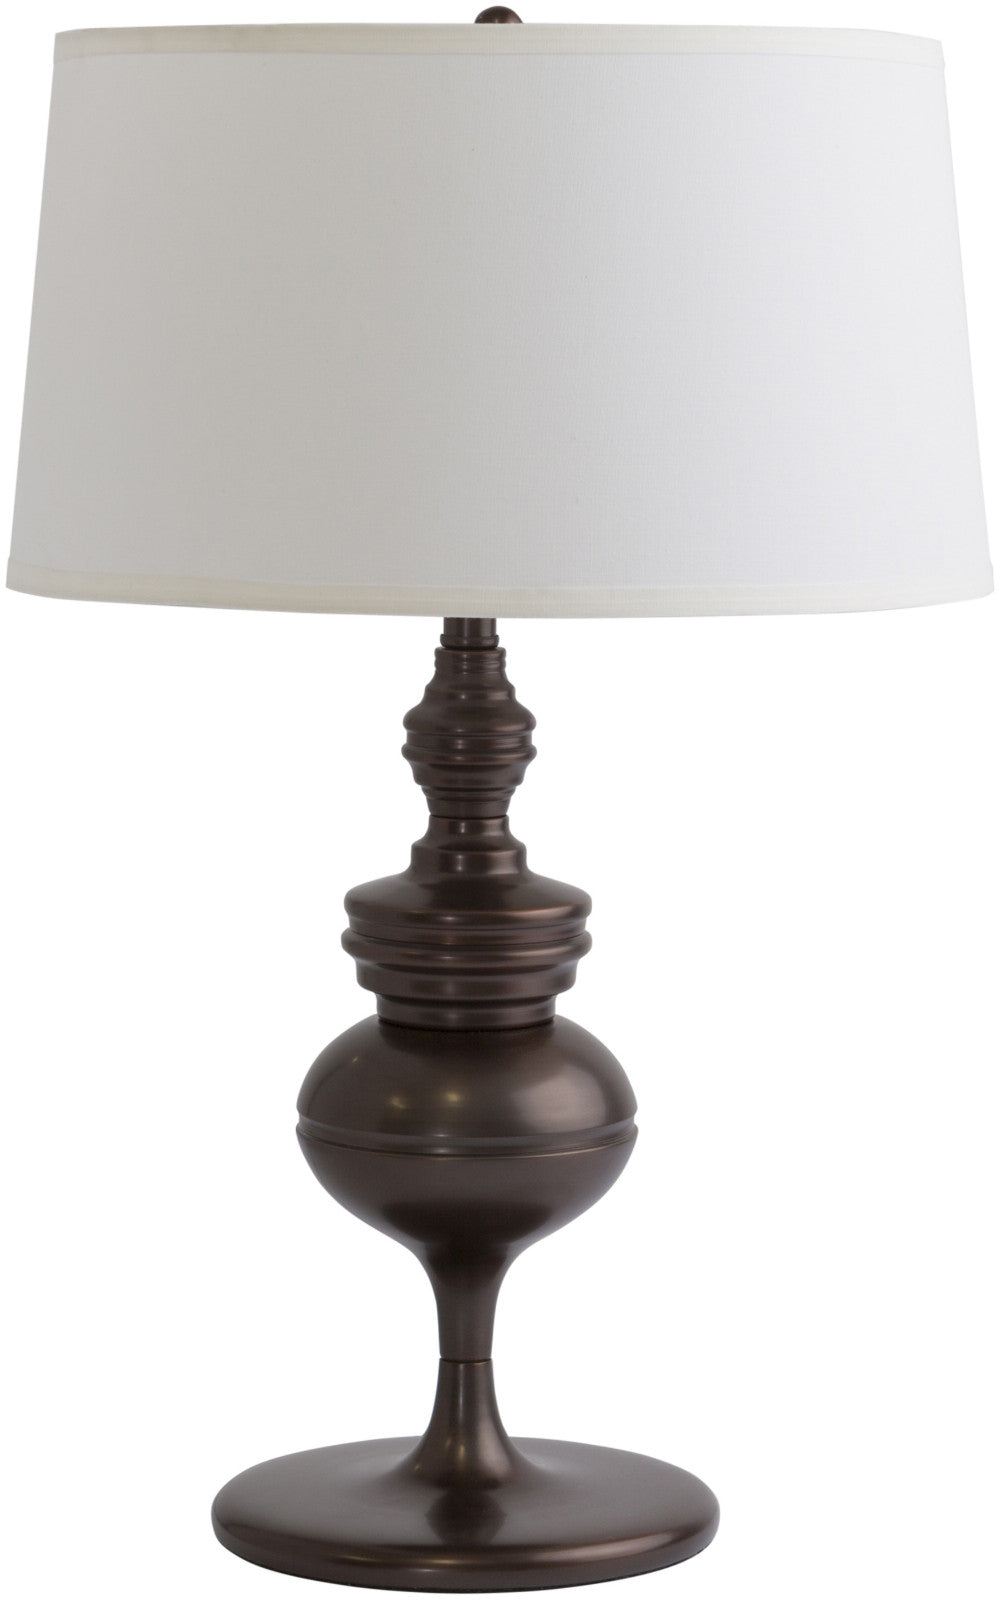 Surya Eli ELLP-001 ivory Lamp Table Lamp